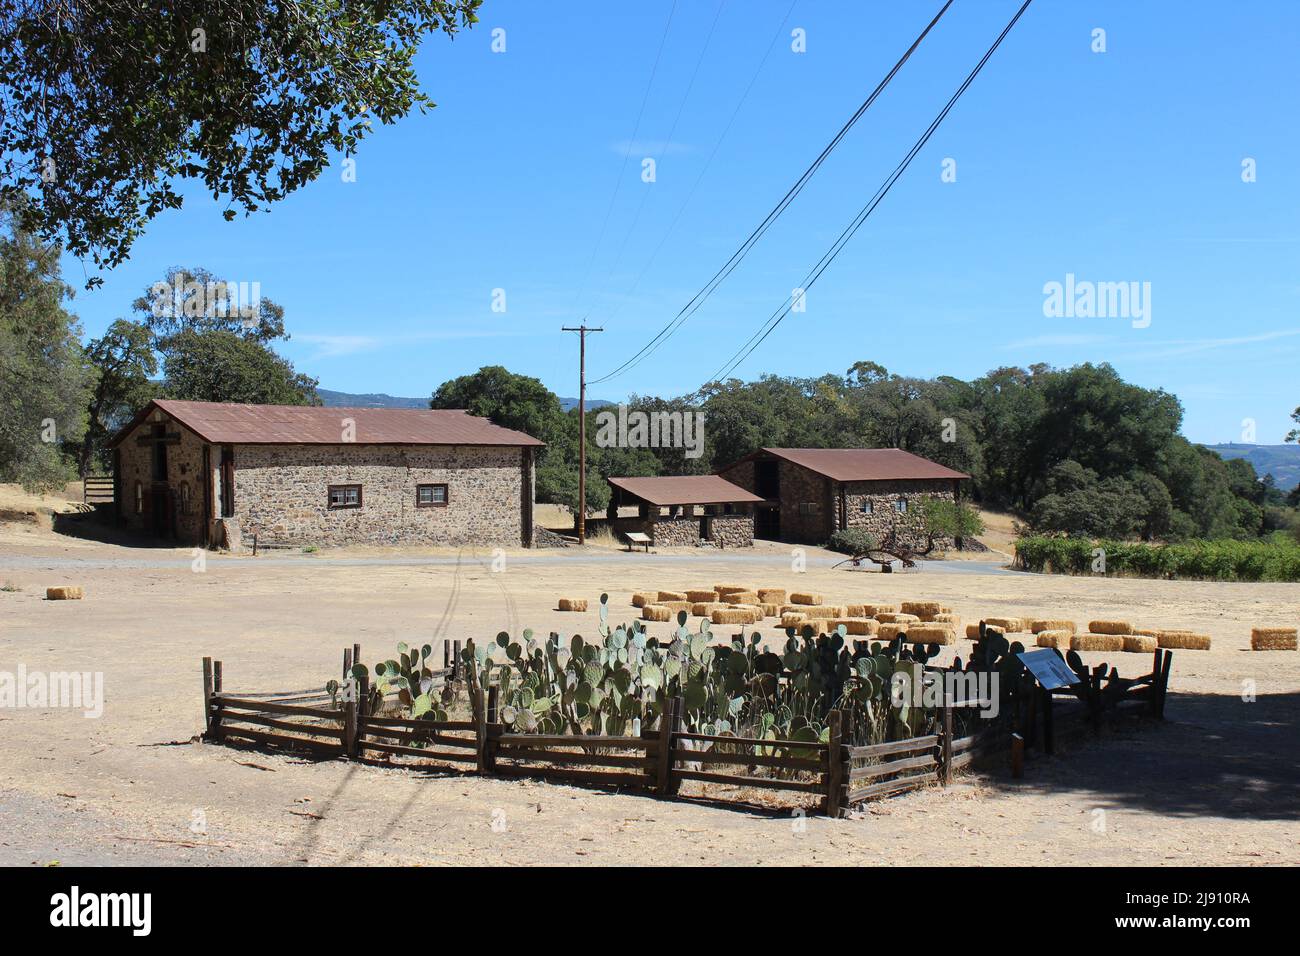 Spineless Prickly Pear Cacti, Stall (ehemaliger Sherry Barn), Dung Pit und Stallion Barn, Jack London State Historic Park, Kalifornien Stockfoto